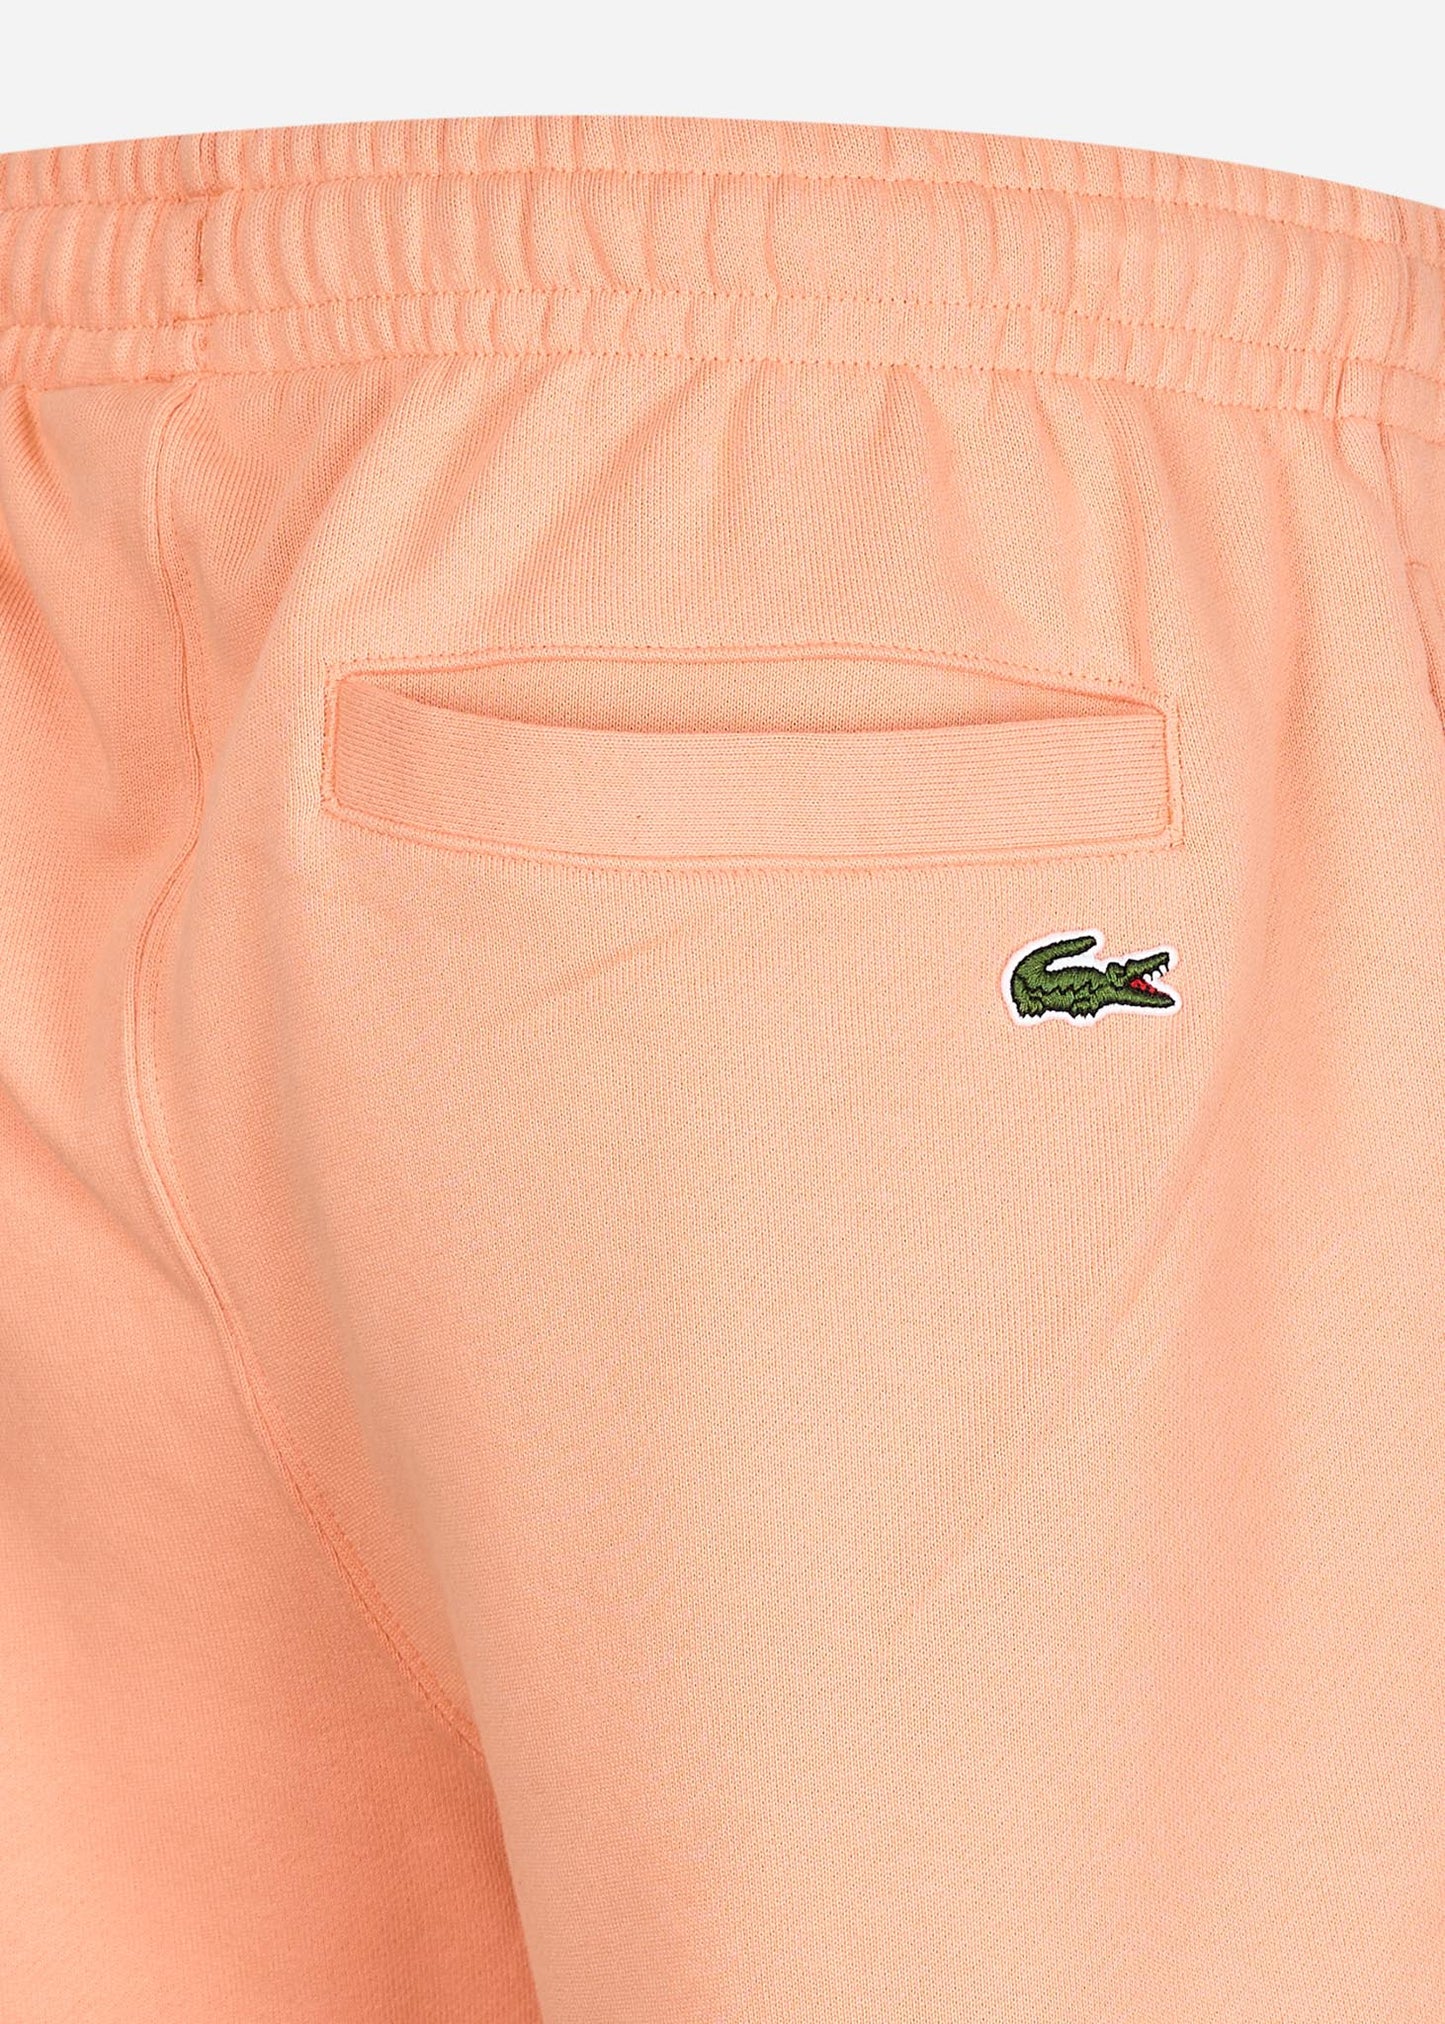 Branded shorts - ledge